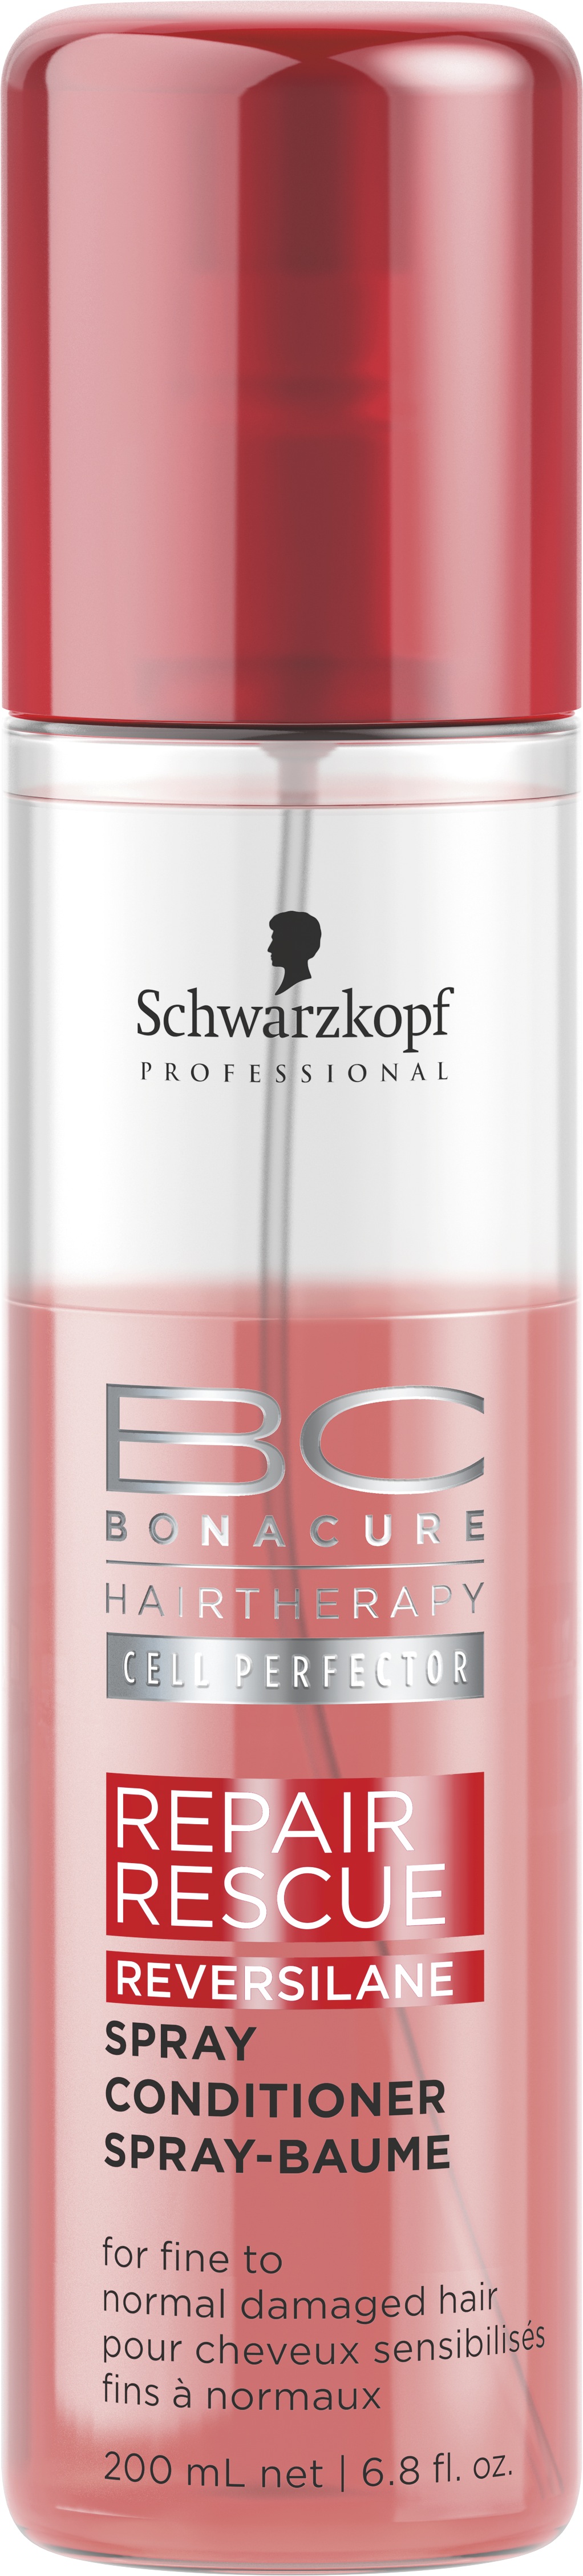 Schwarzkopf BC Repair Resque Spray Conditioner